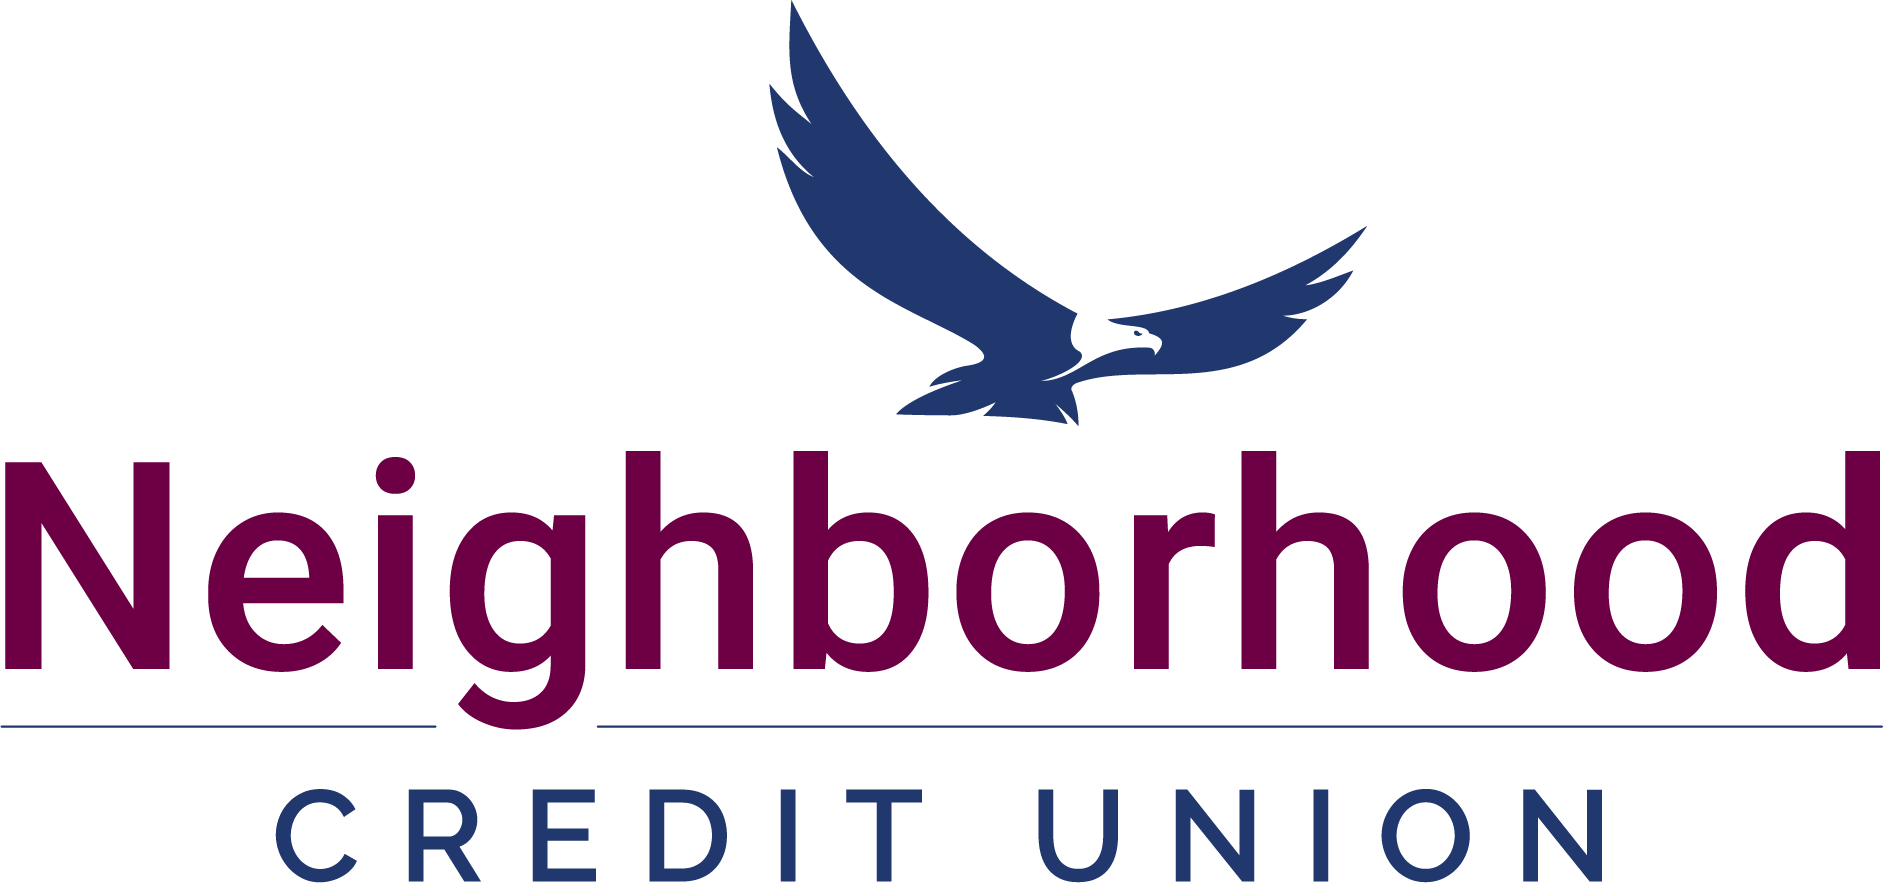 neighborhood credit union color logo